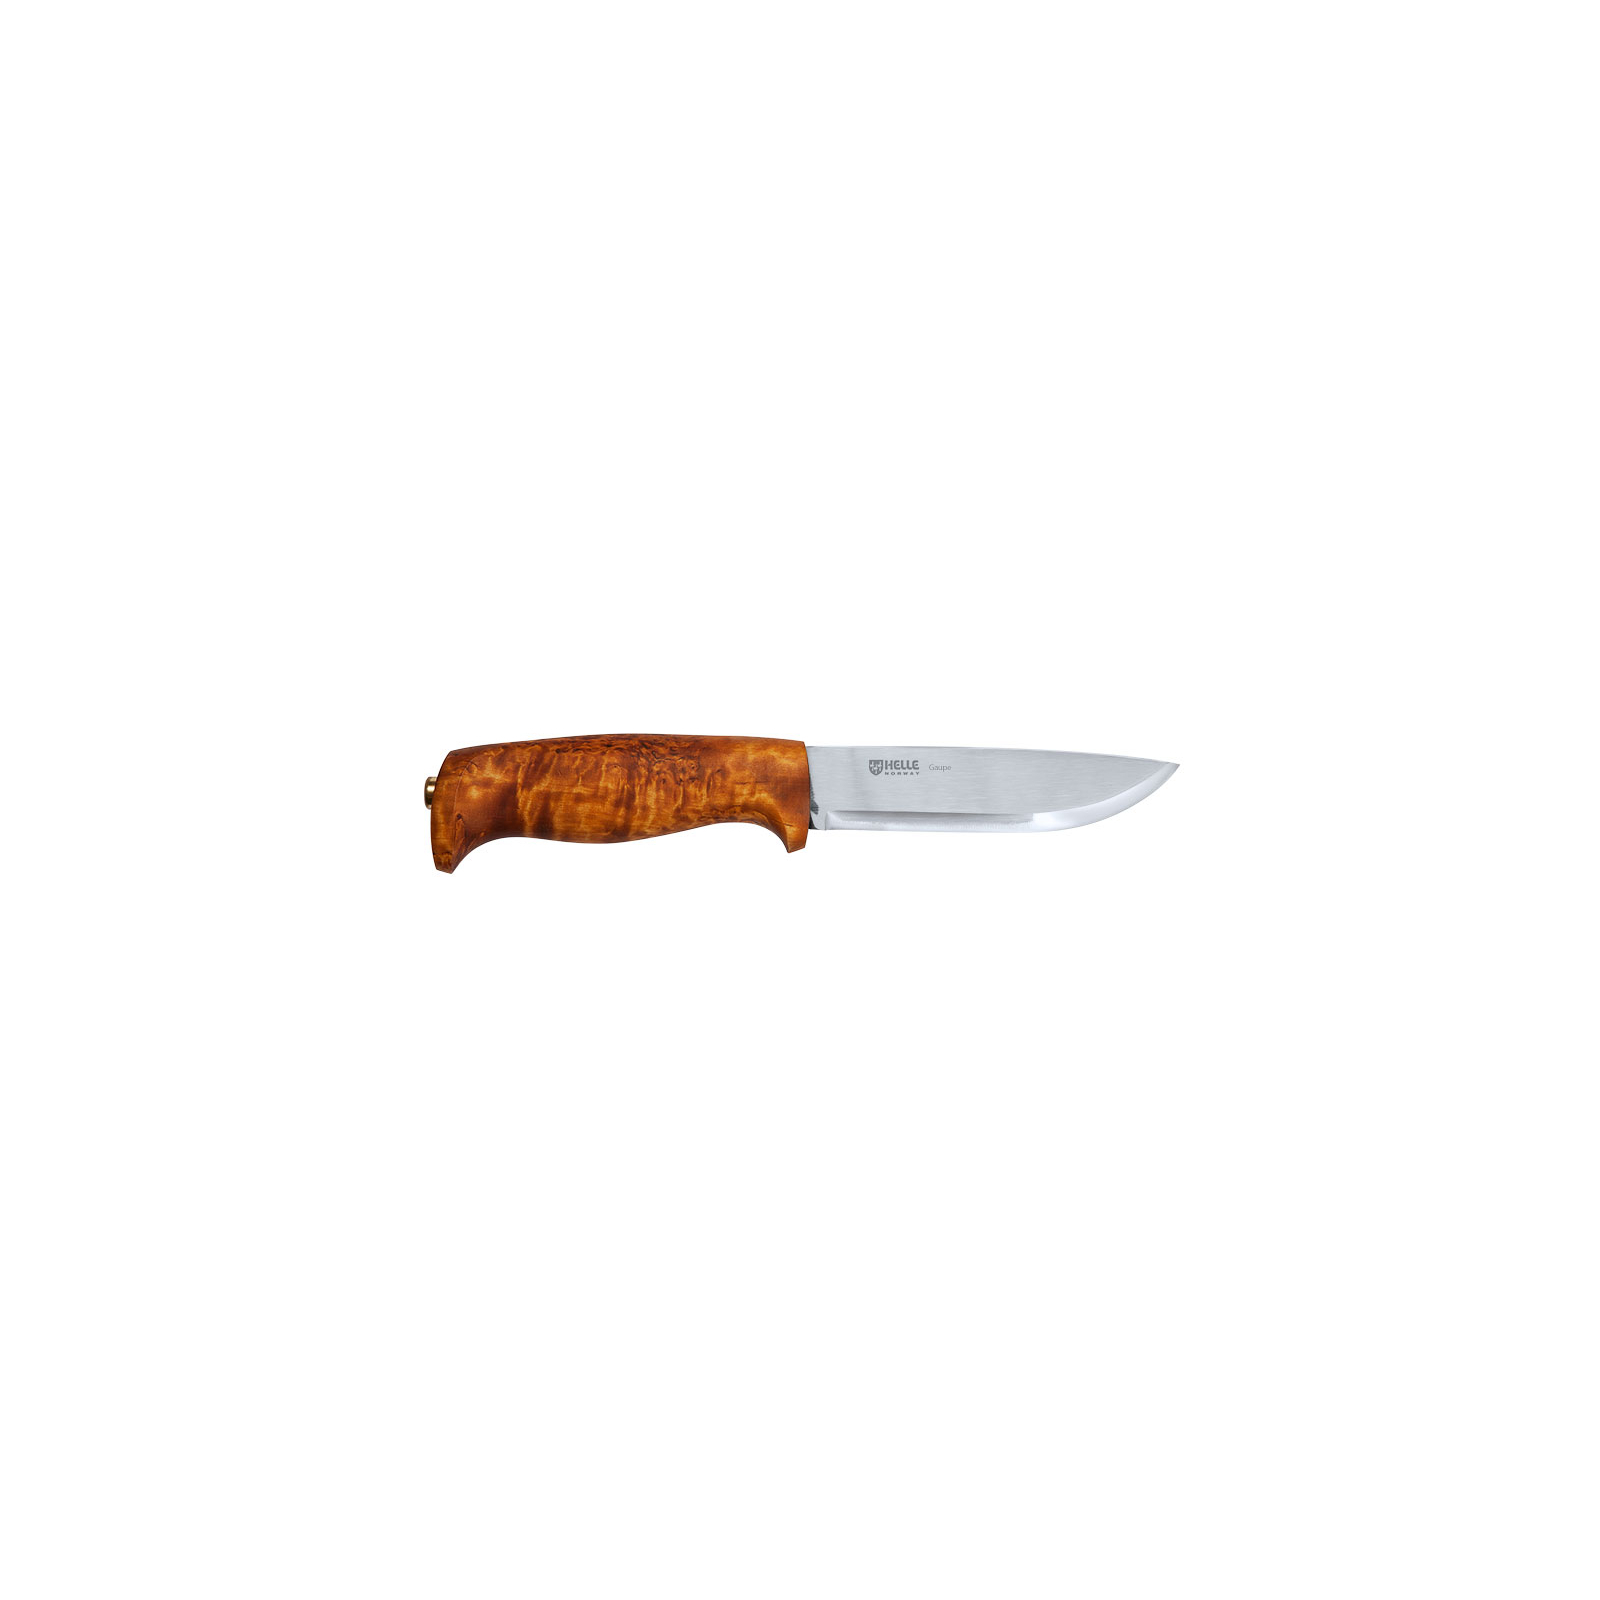 Нож Helle Gaupe S (507S)